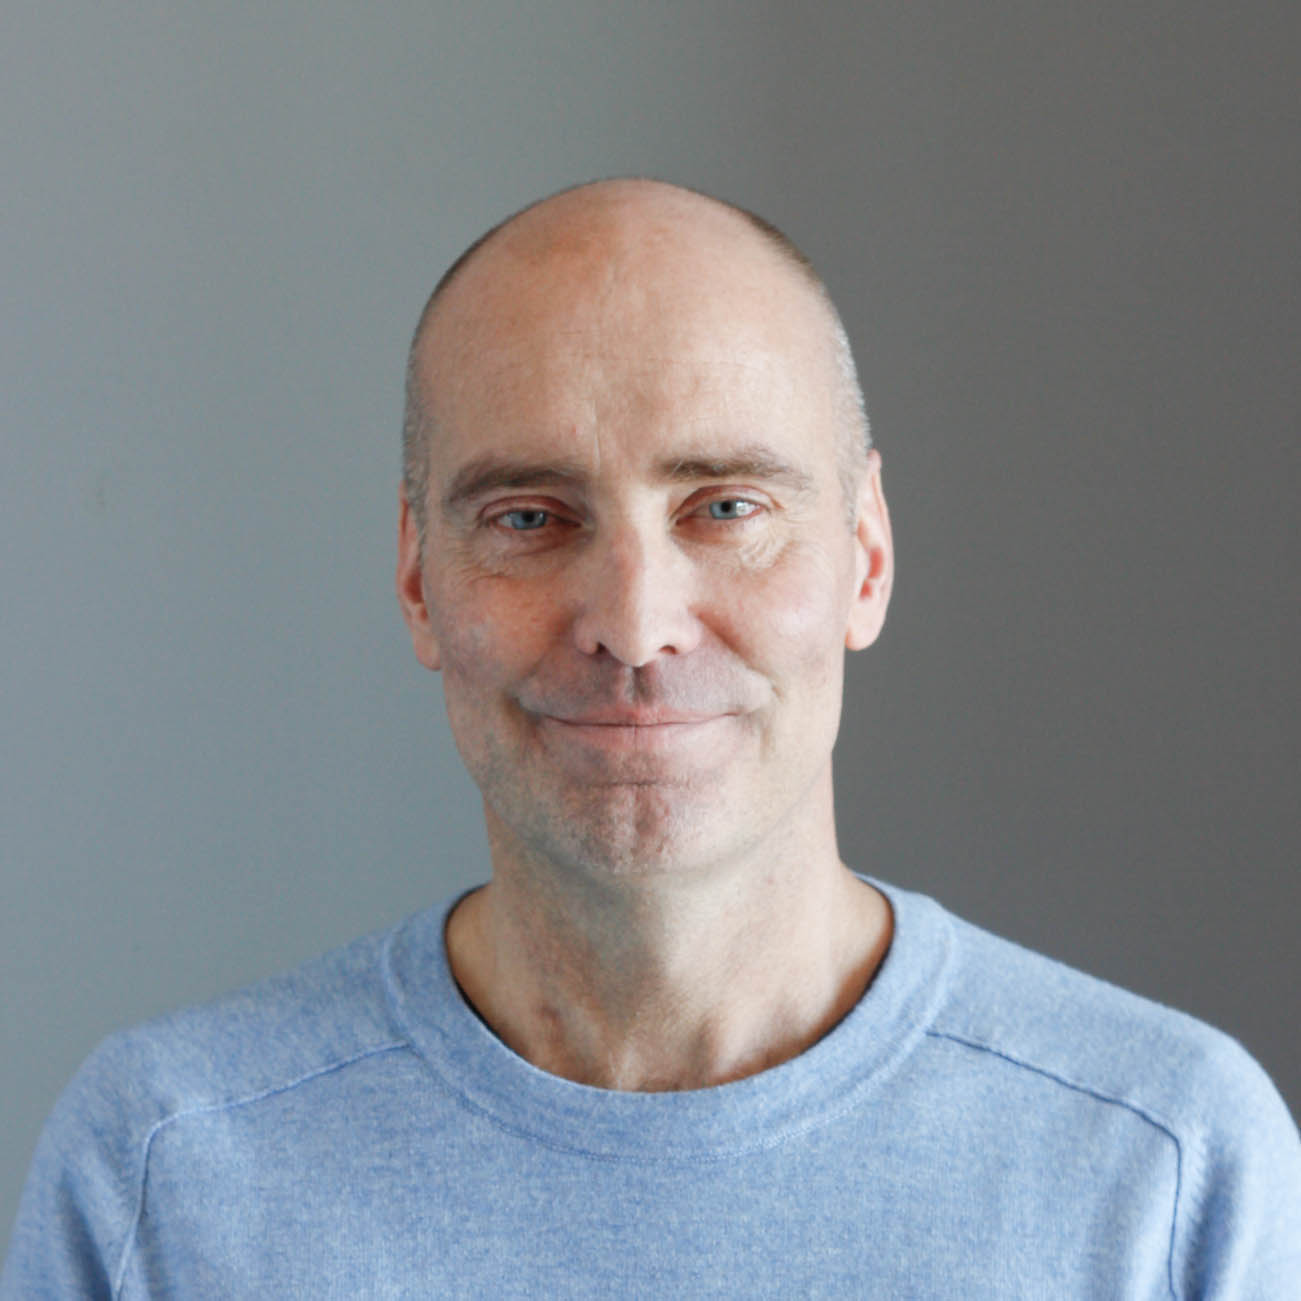 Jonas Frisén, MD/PhD